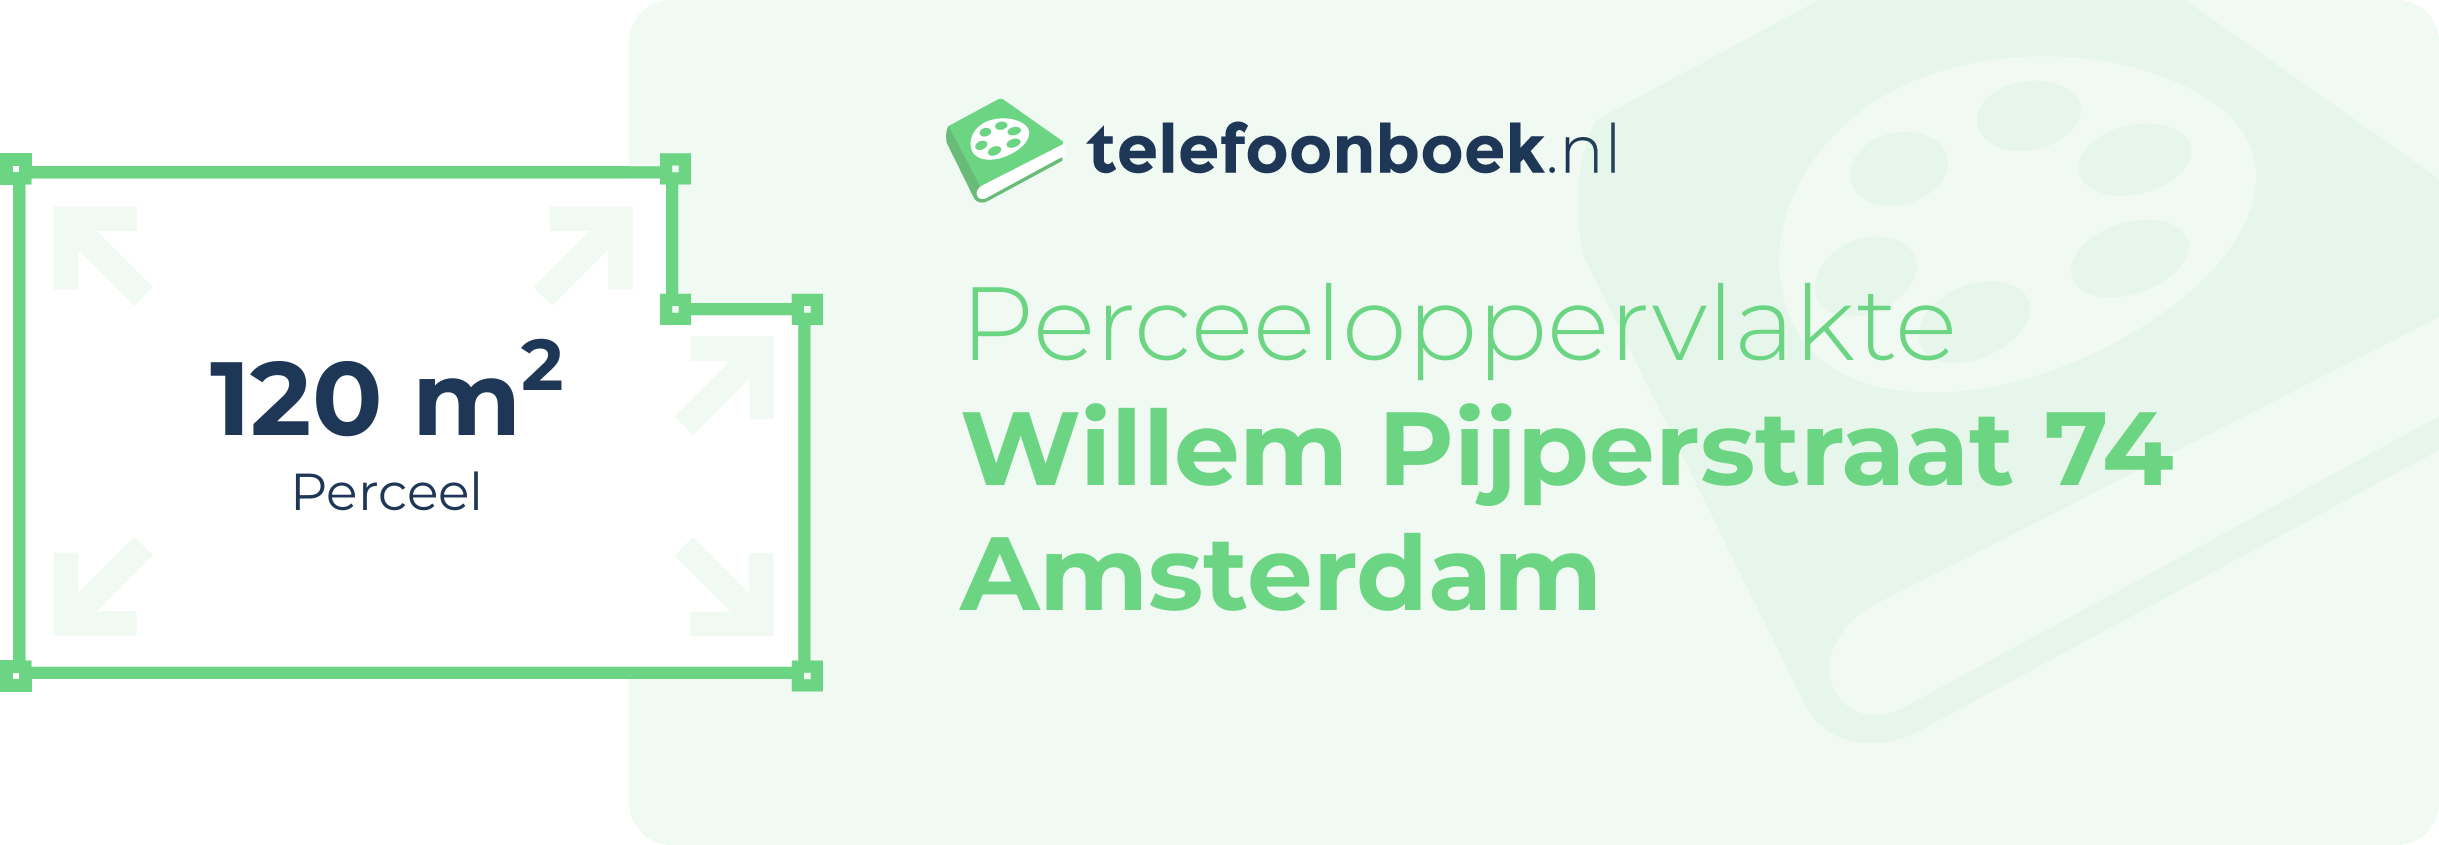 Perceeloppervlakte Willem Pijperstraat 74 Amsterdam